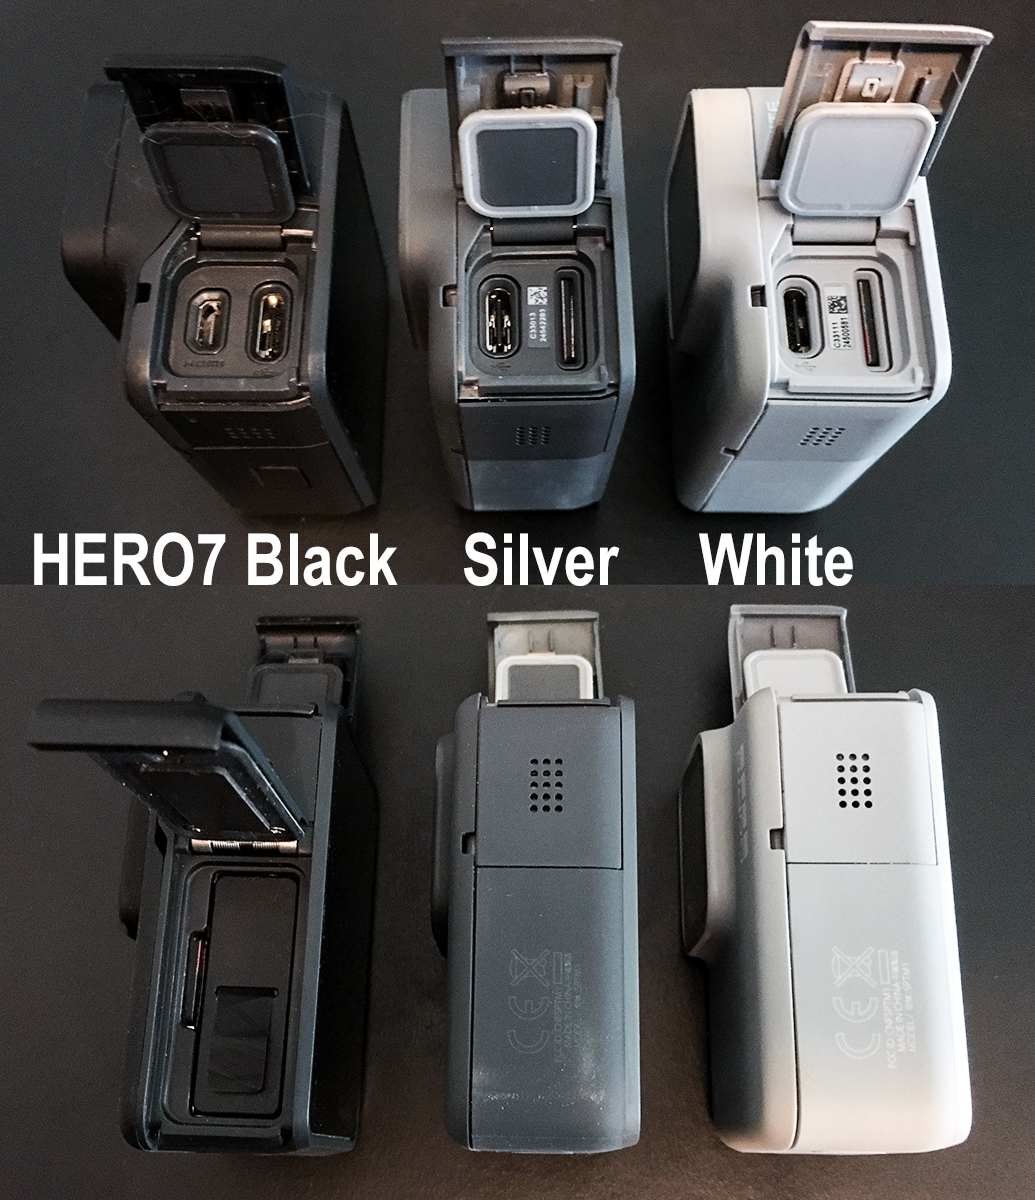 GoPro Hero7 Black vs GoPro Hero7 White Detailed Comparison